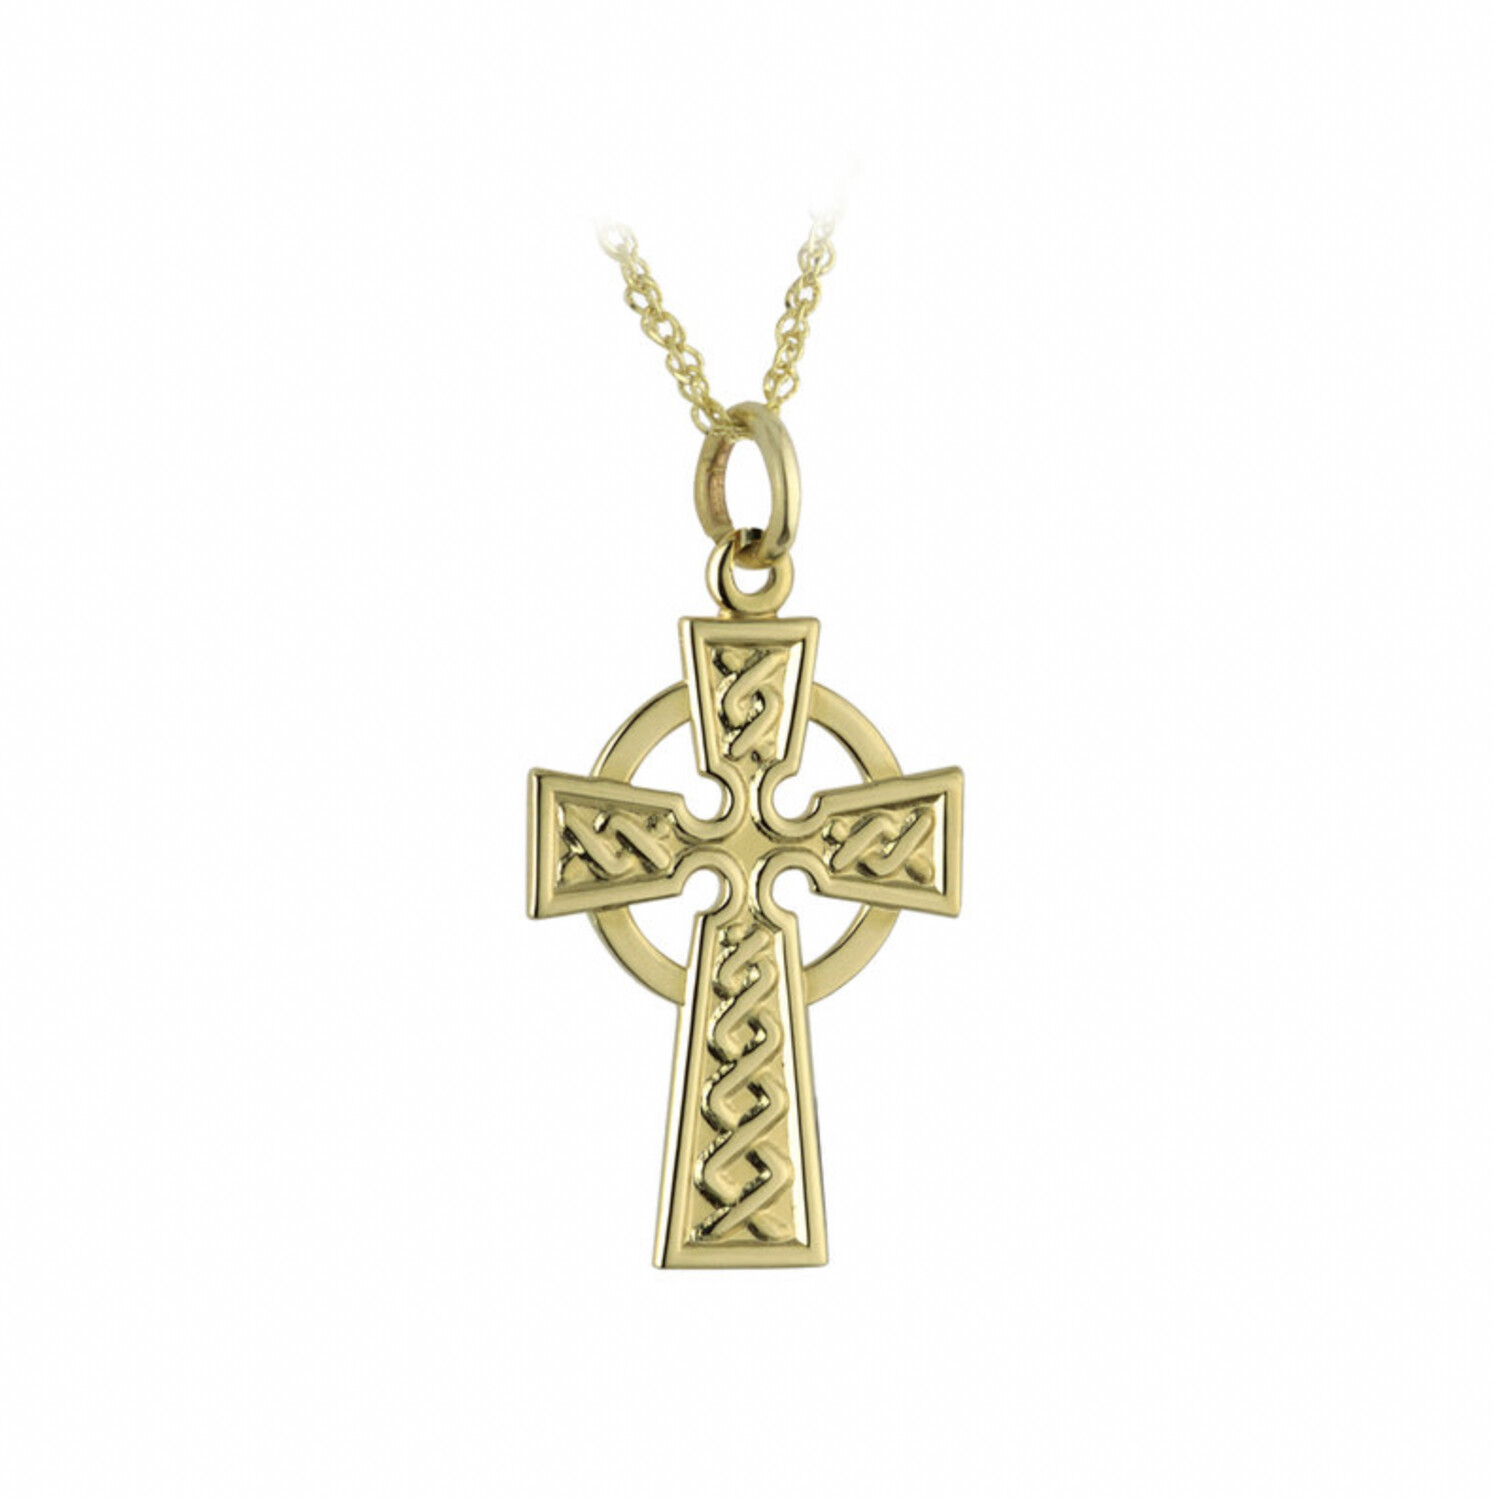 10K Gold Small Celtic Cross pendant - Boxed